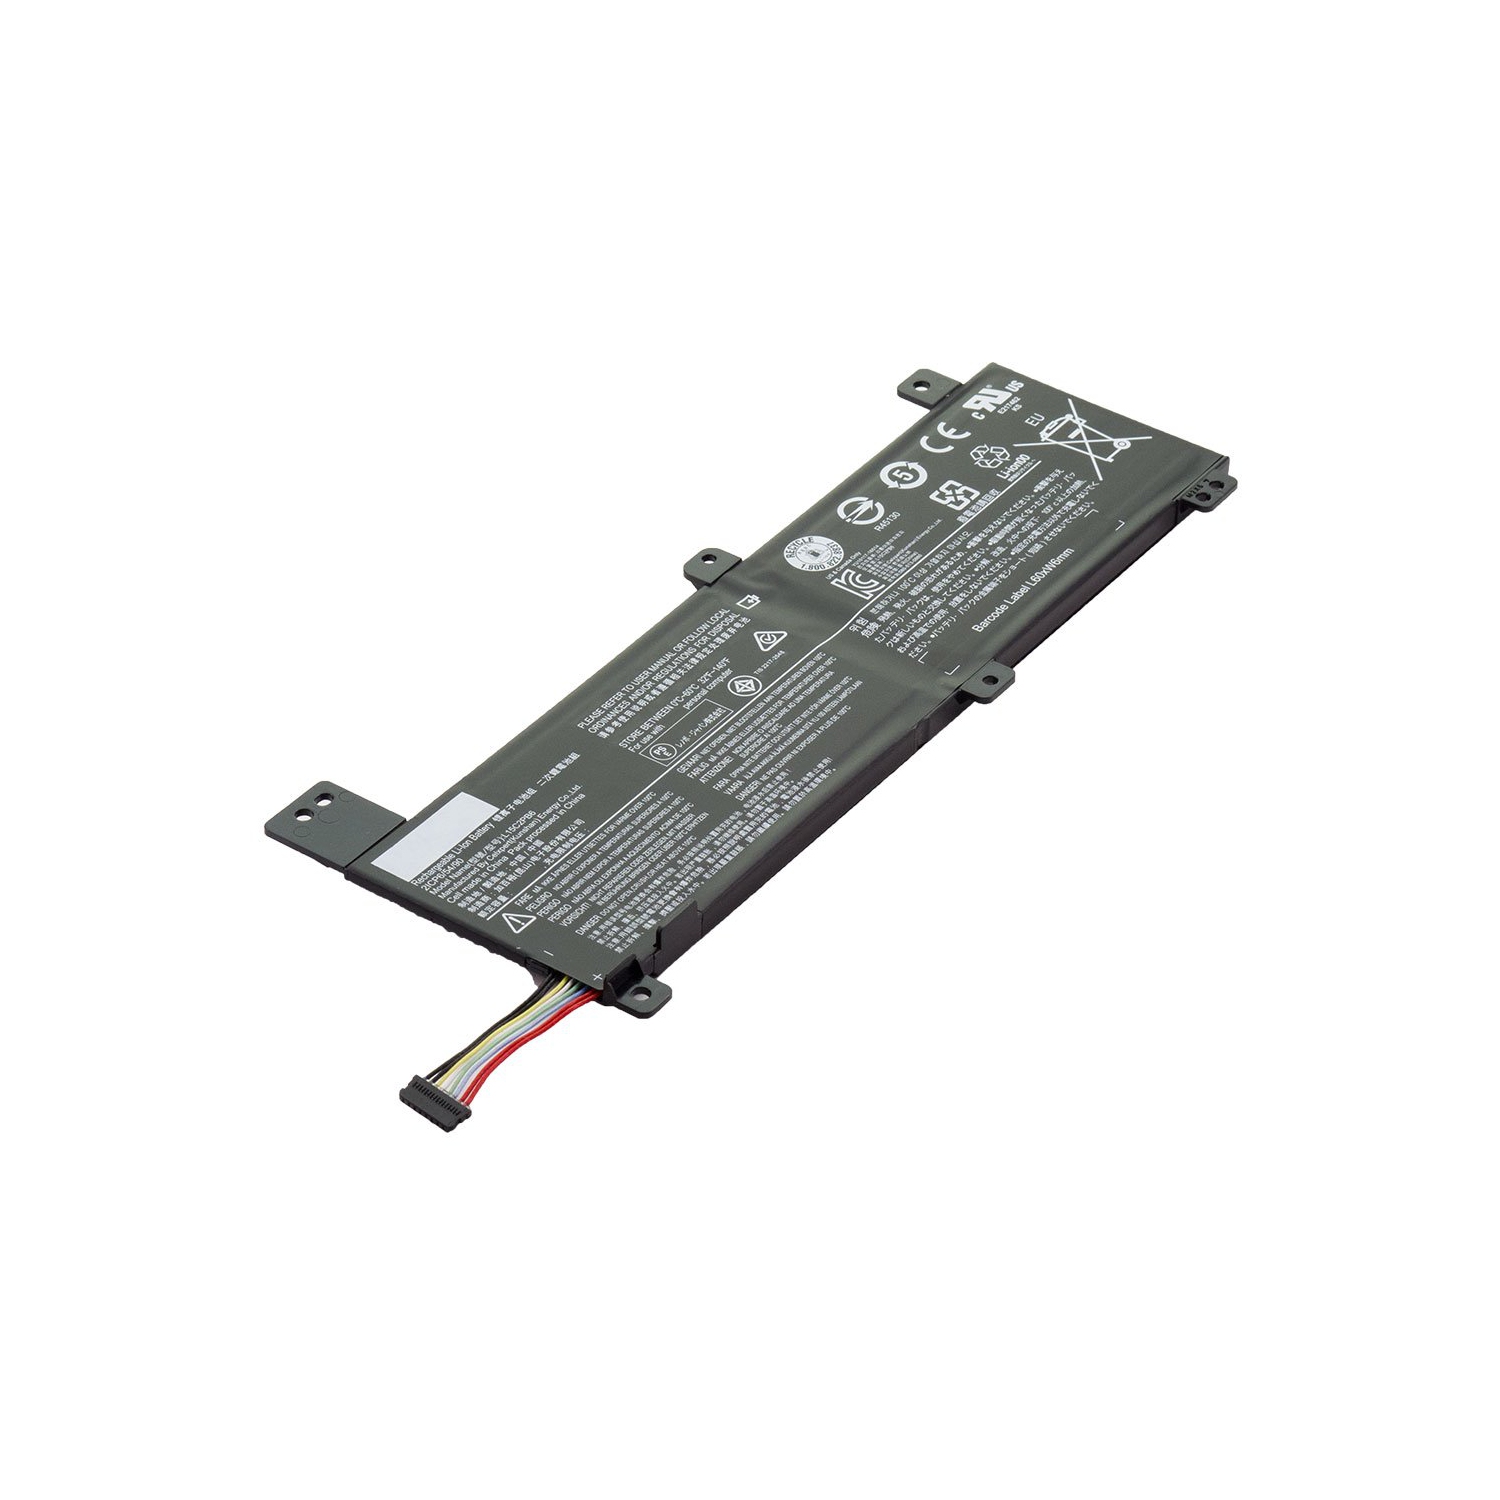 Laptop Battery Replacement for Lenovo IdeaPad 310 14ISK 80UG0000BR, IdeaPad 310 14ISK, L15C2PB6, L15L2PB2, L15M2PB4